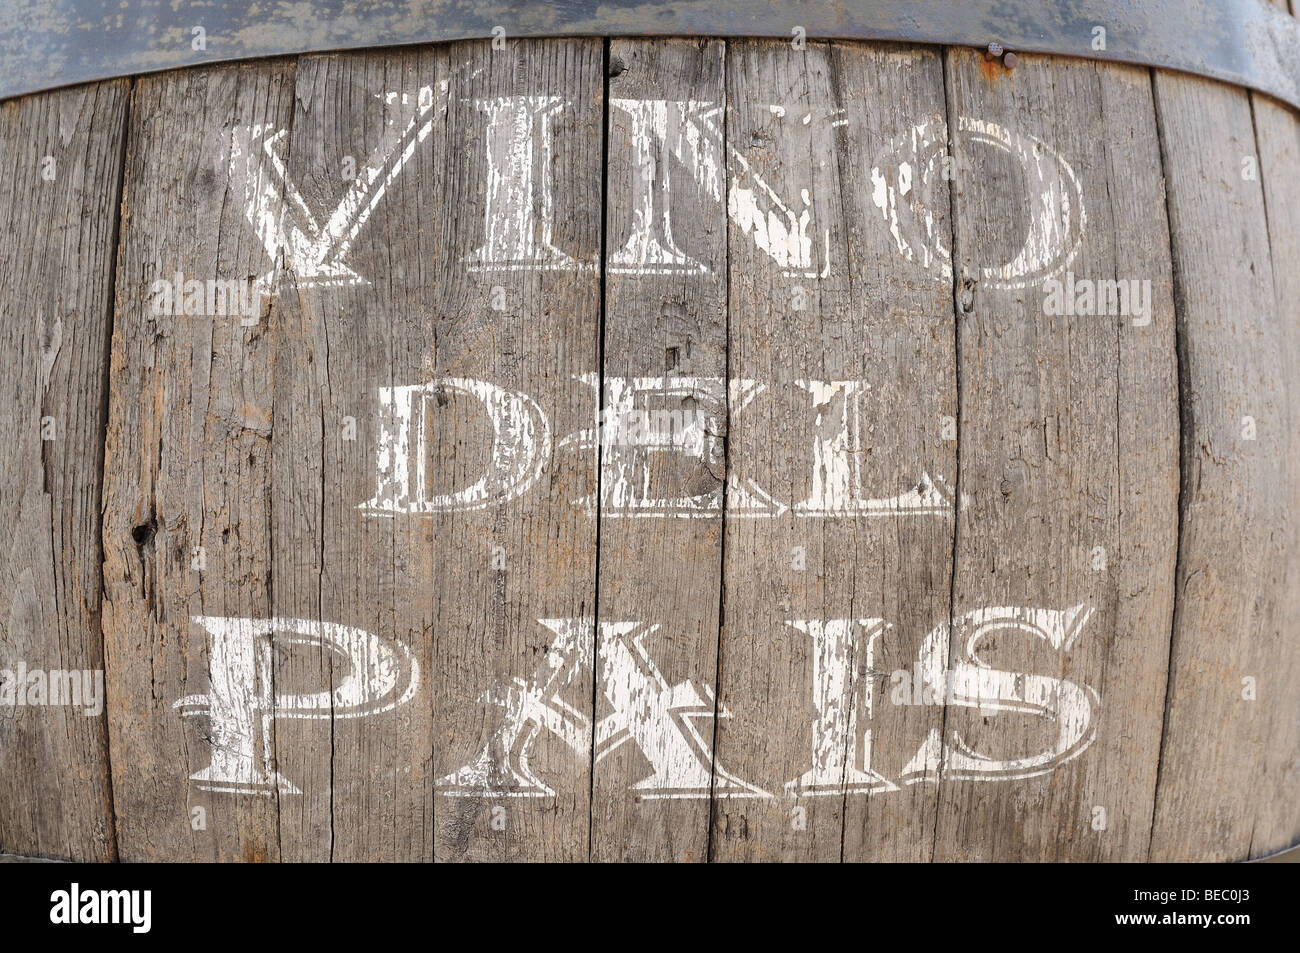 Vino del Pais - Table Wine Stock Photo